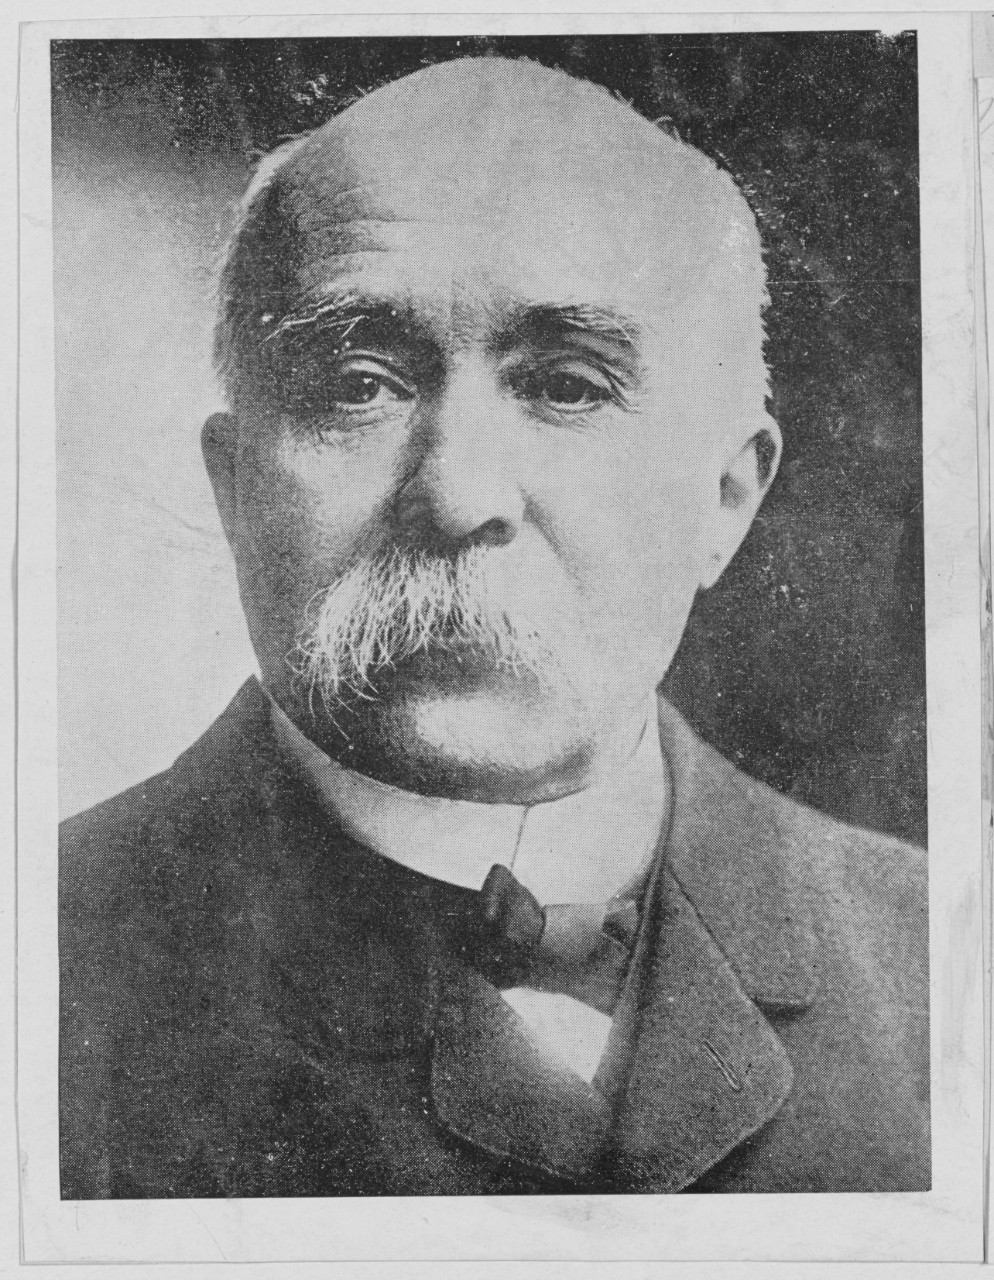 Premier Clemenceau of France